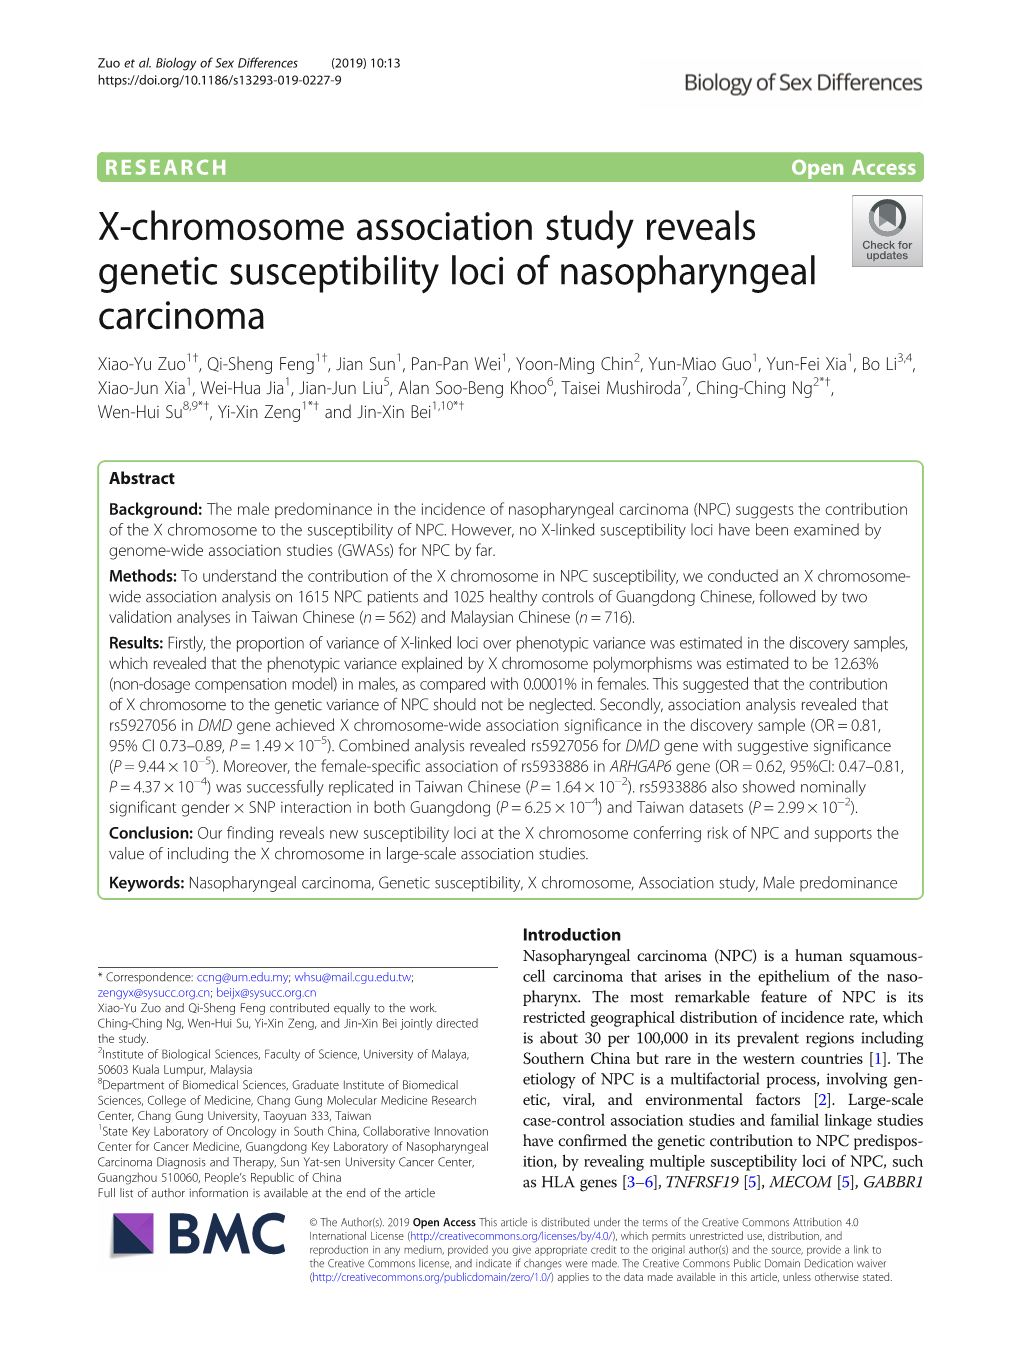 X-Chromosome Association Study Reveals Genetic Susceptibility Loci Of